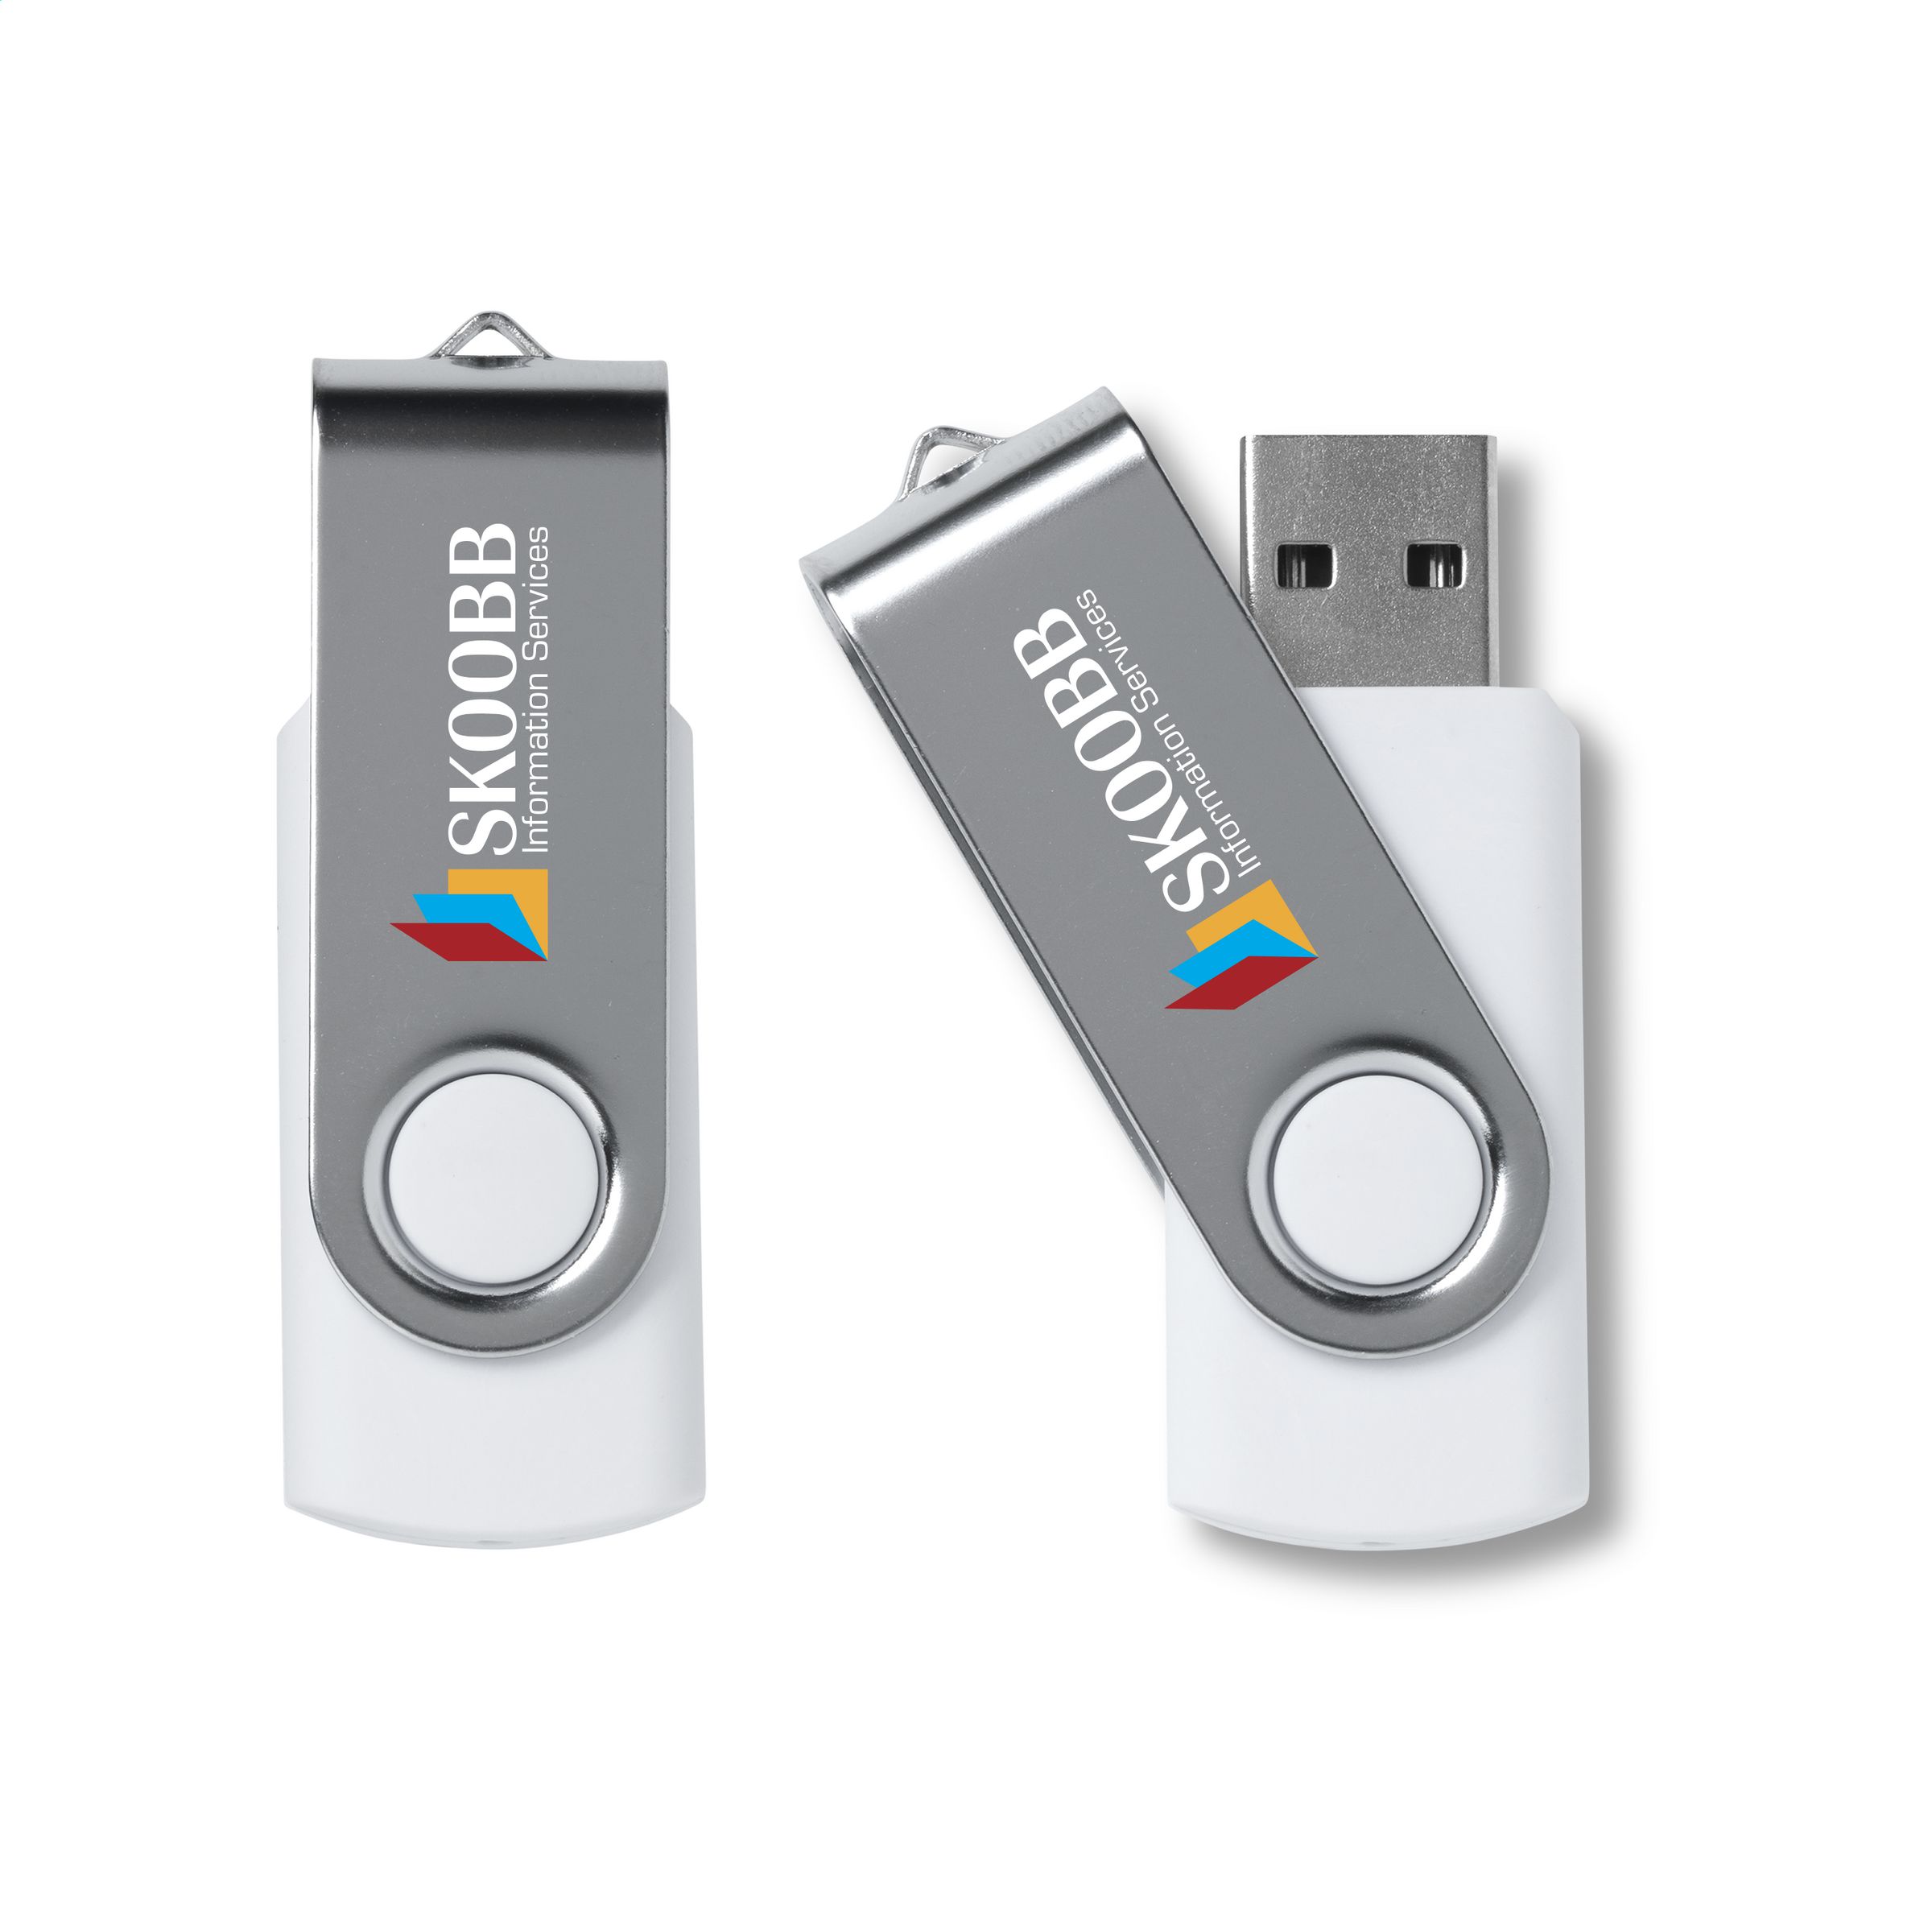 StorageMate USB 2.0 - Chaville - Zaprinta France